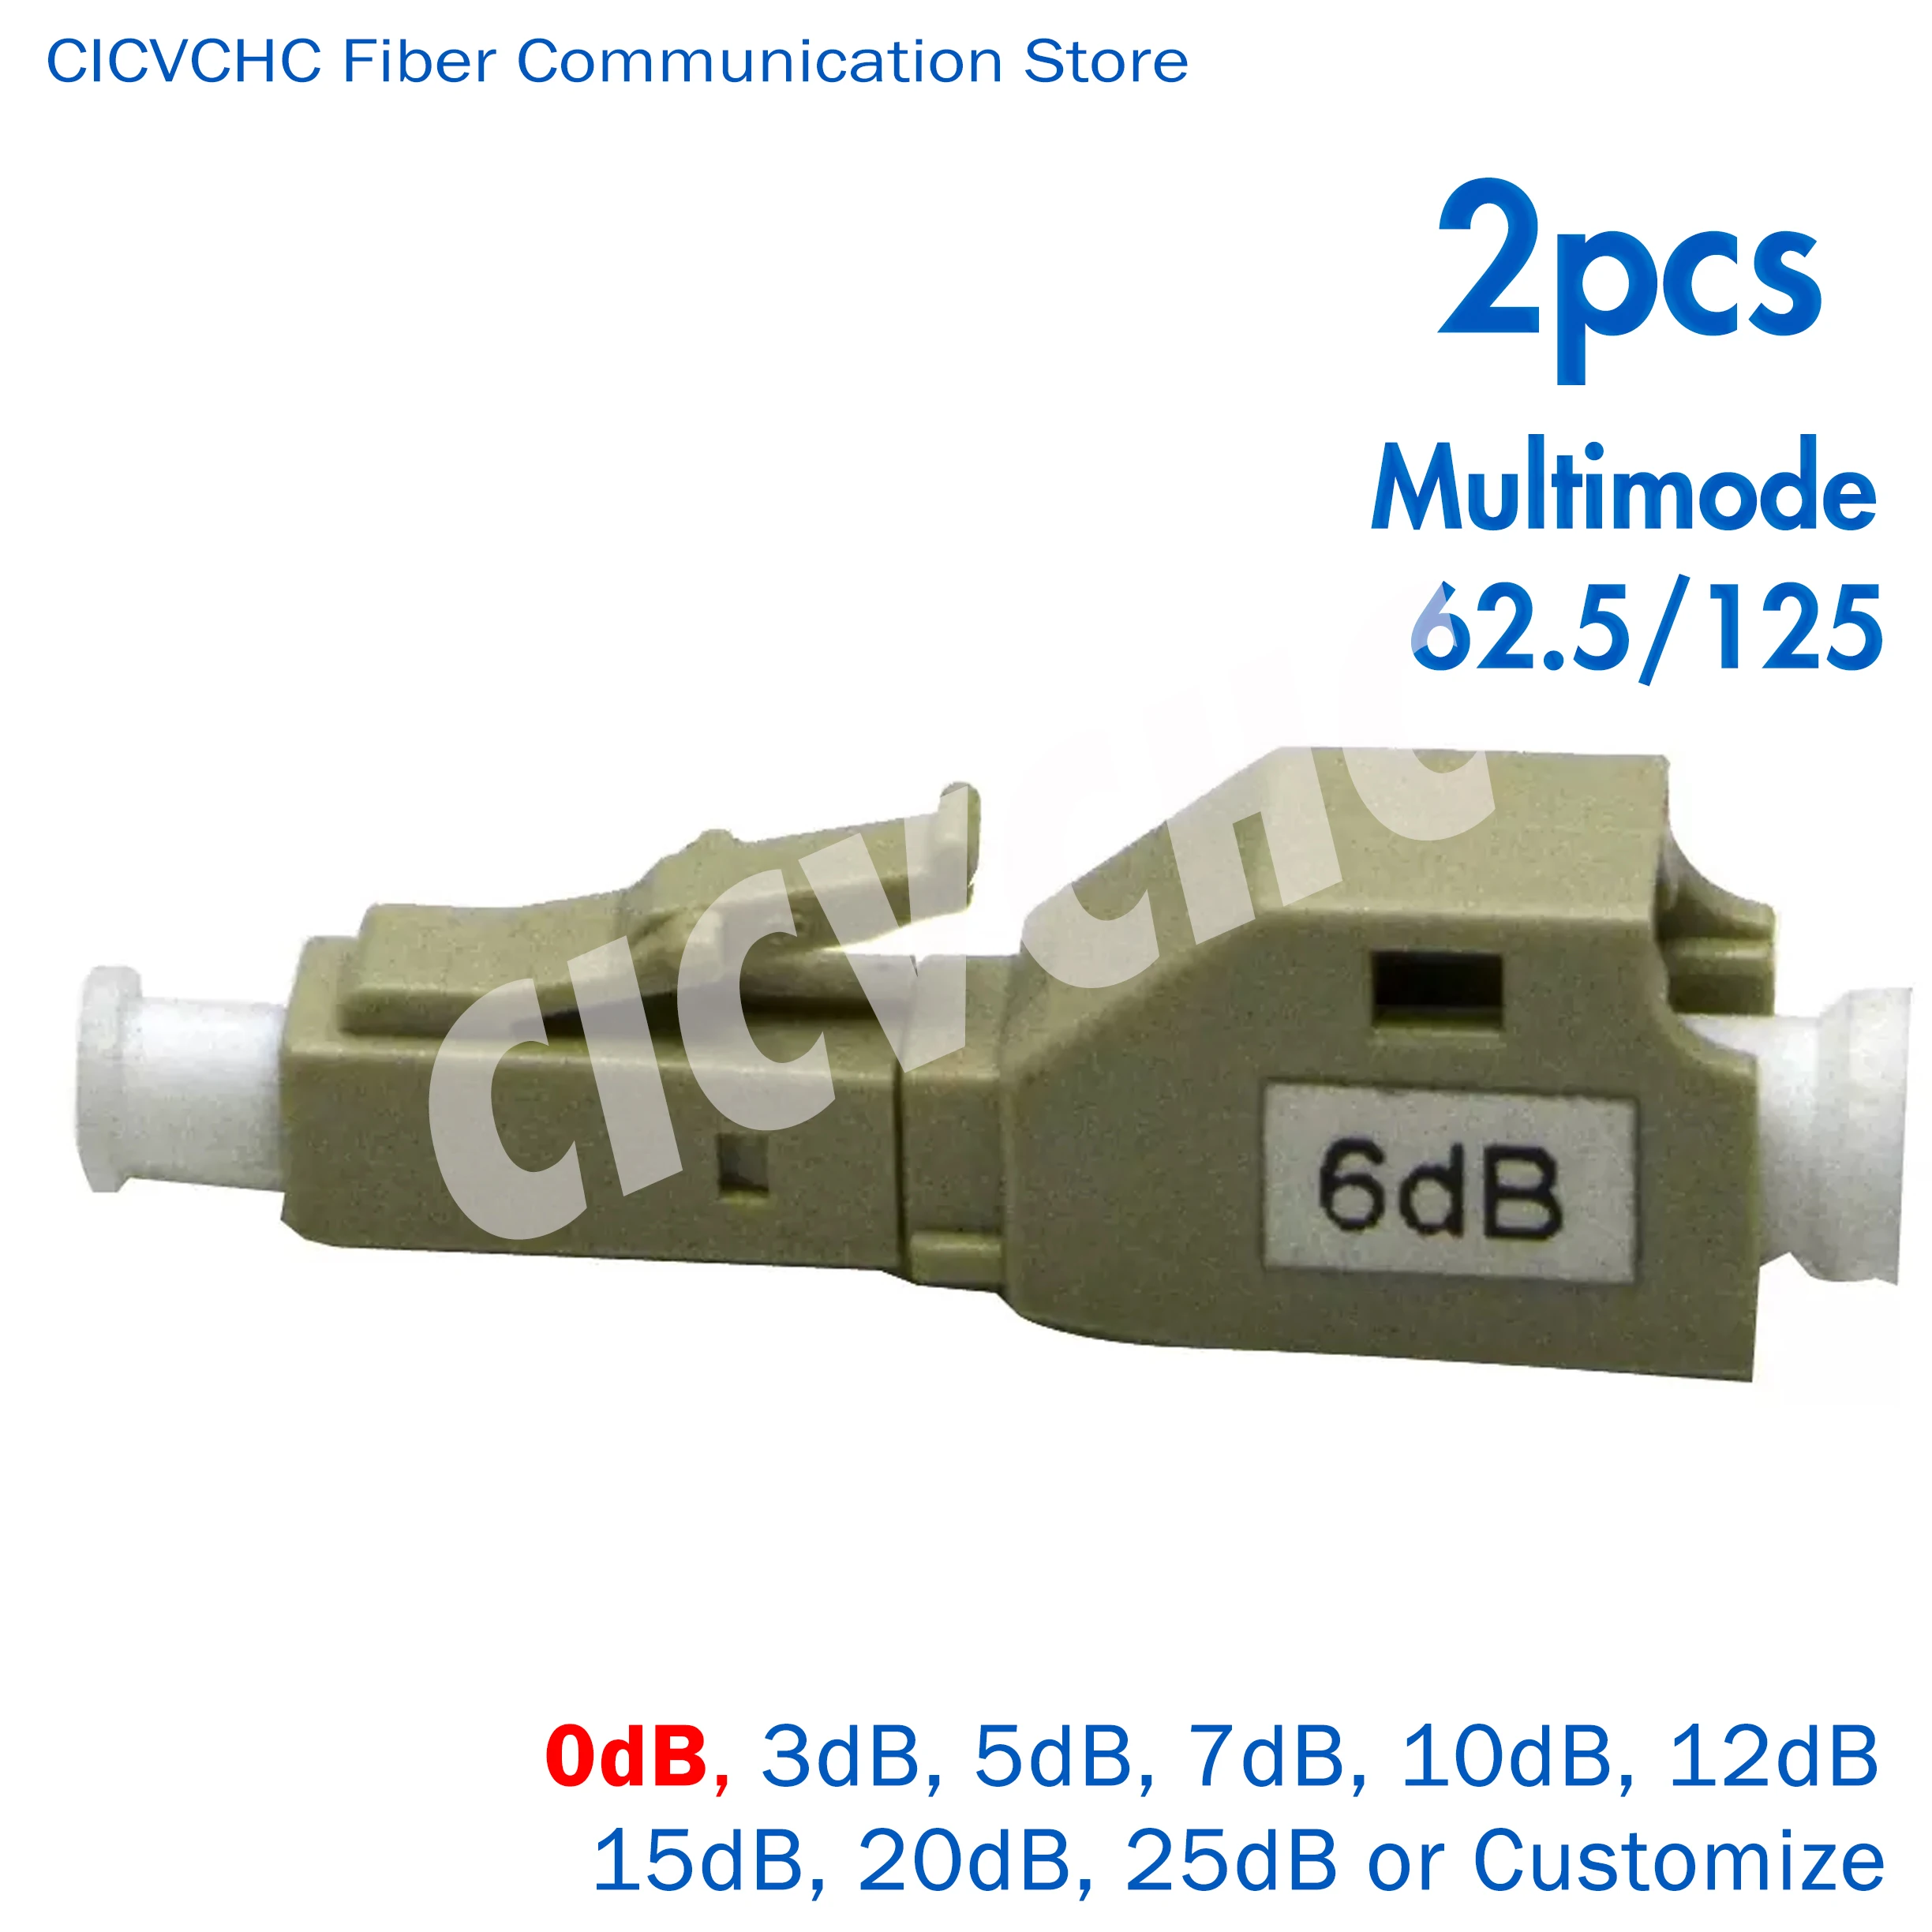 2pcs Multimode 62.5/125 LC/UPC-LC/UPC Male to Female Attenuators (0, 1 to 25dB)/Plug-in type /Fiber Optical